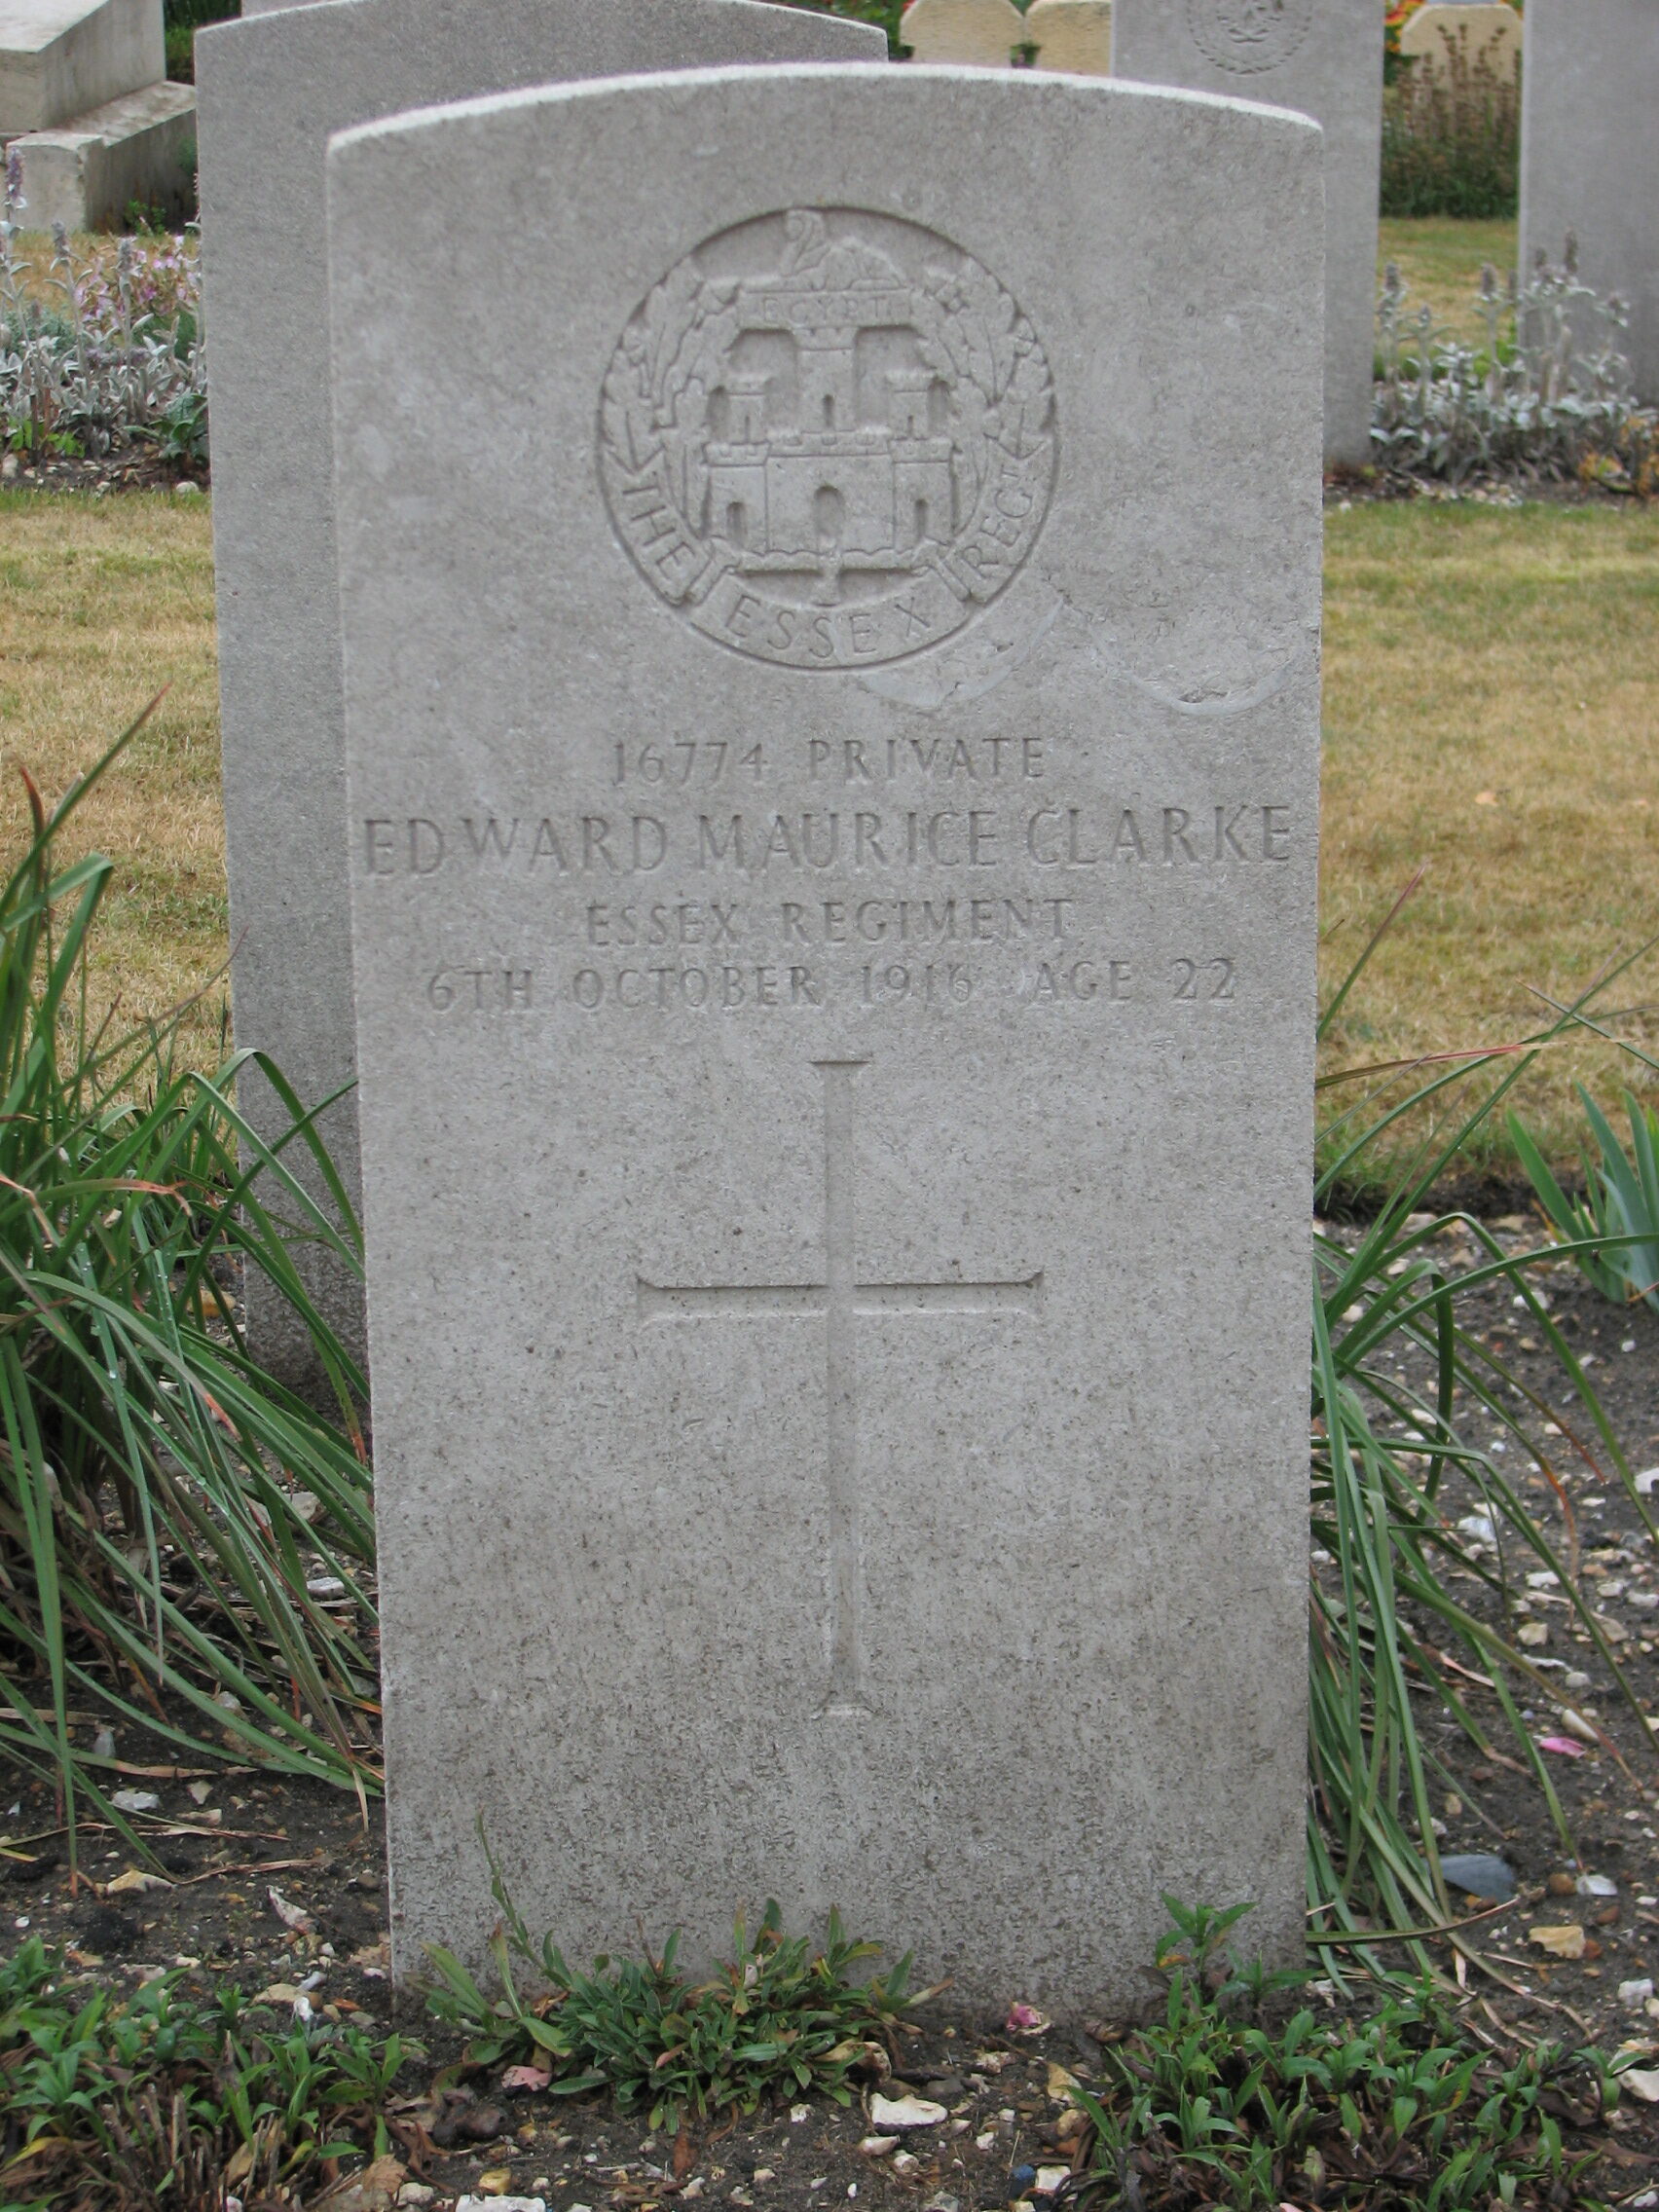 Edward's headstone in St. Sever Cemetery, Rouen<br>MA